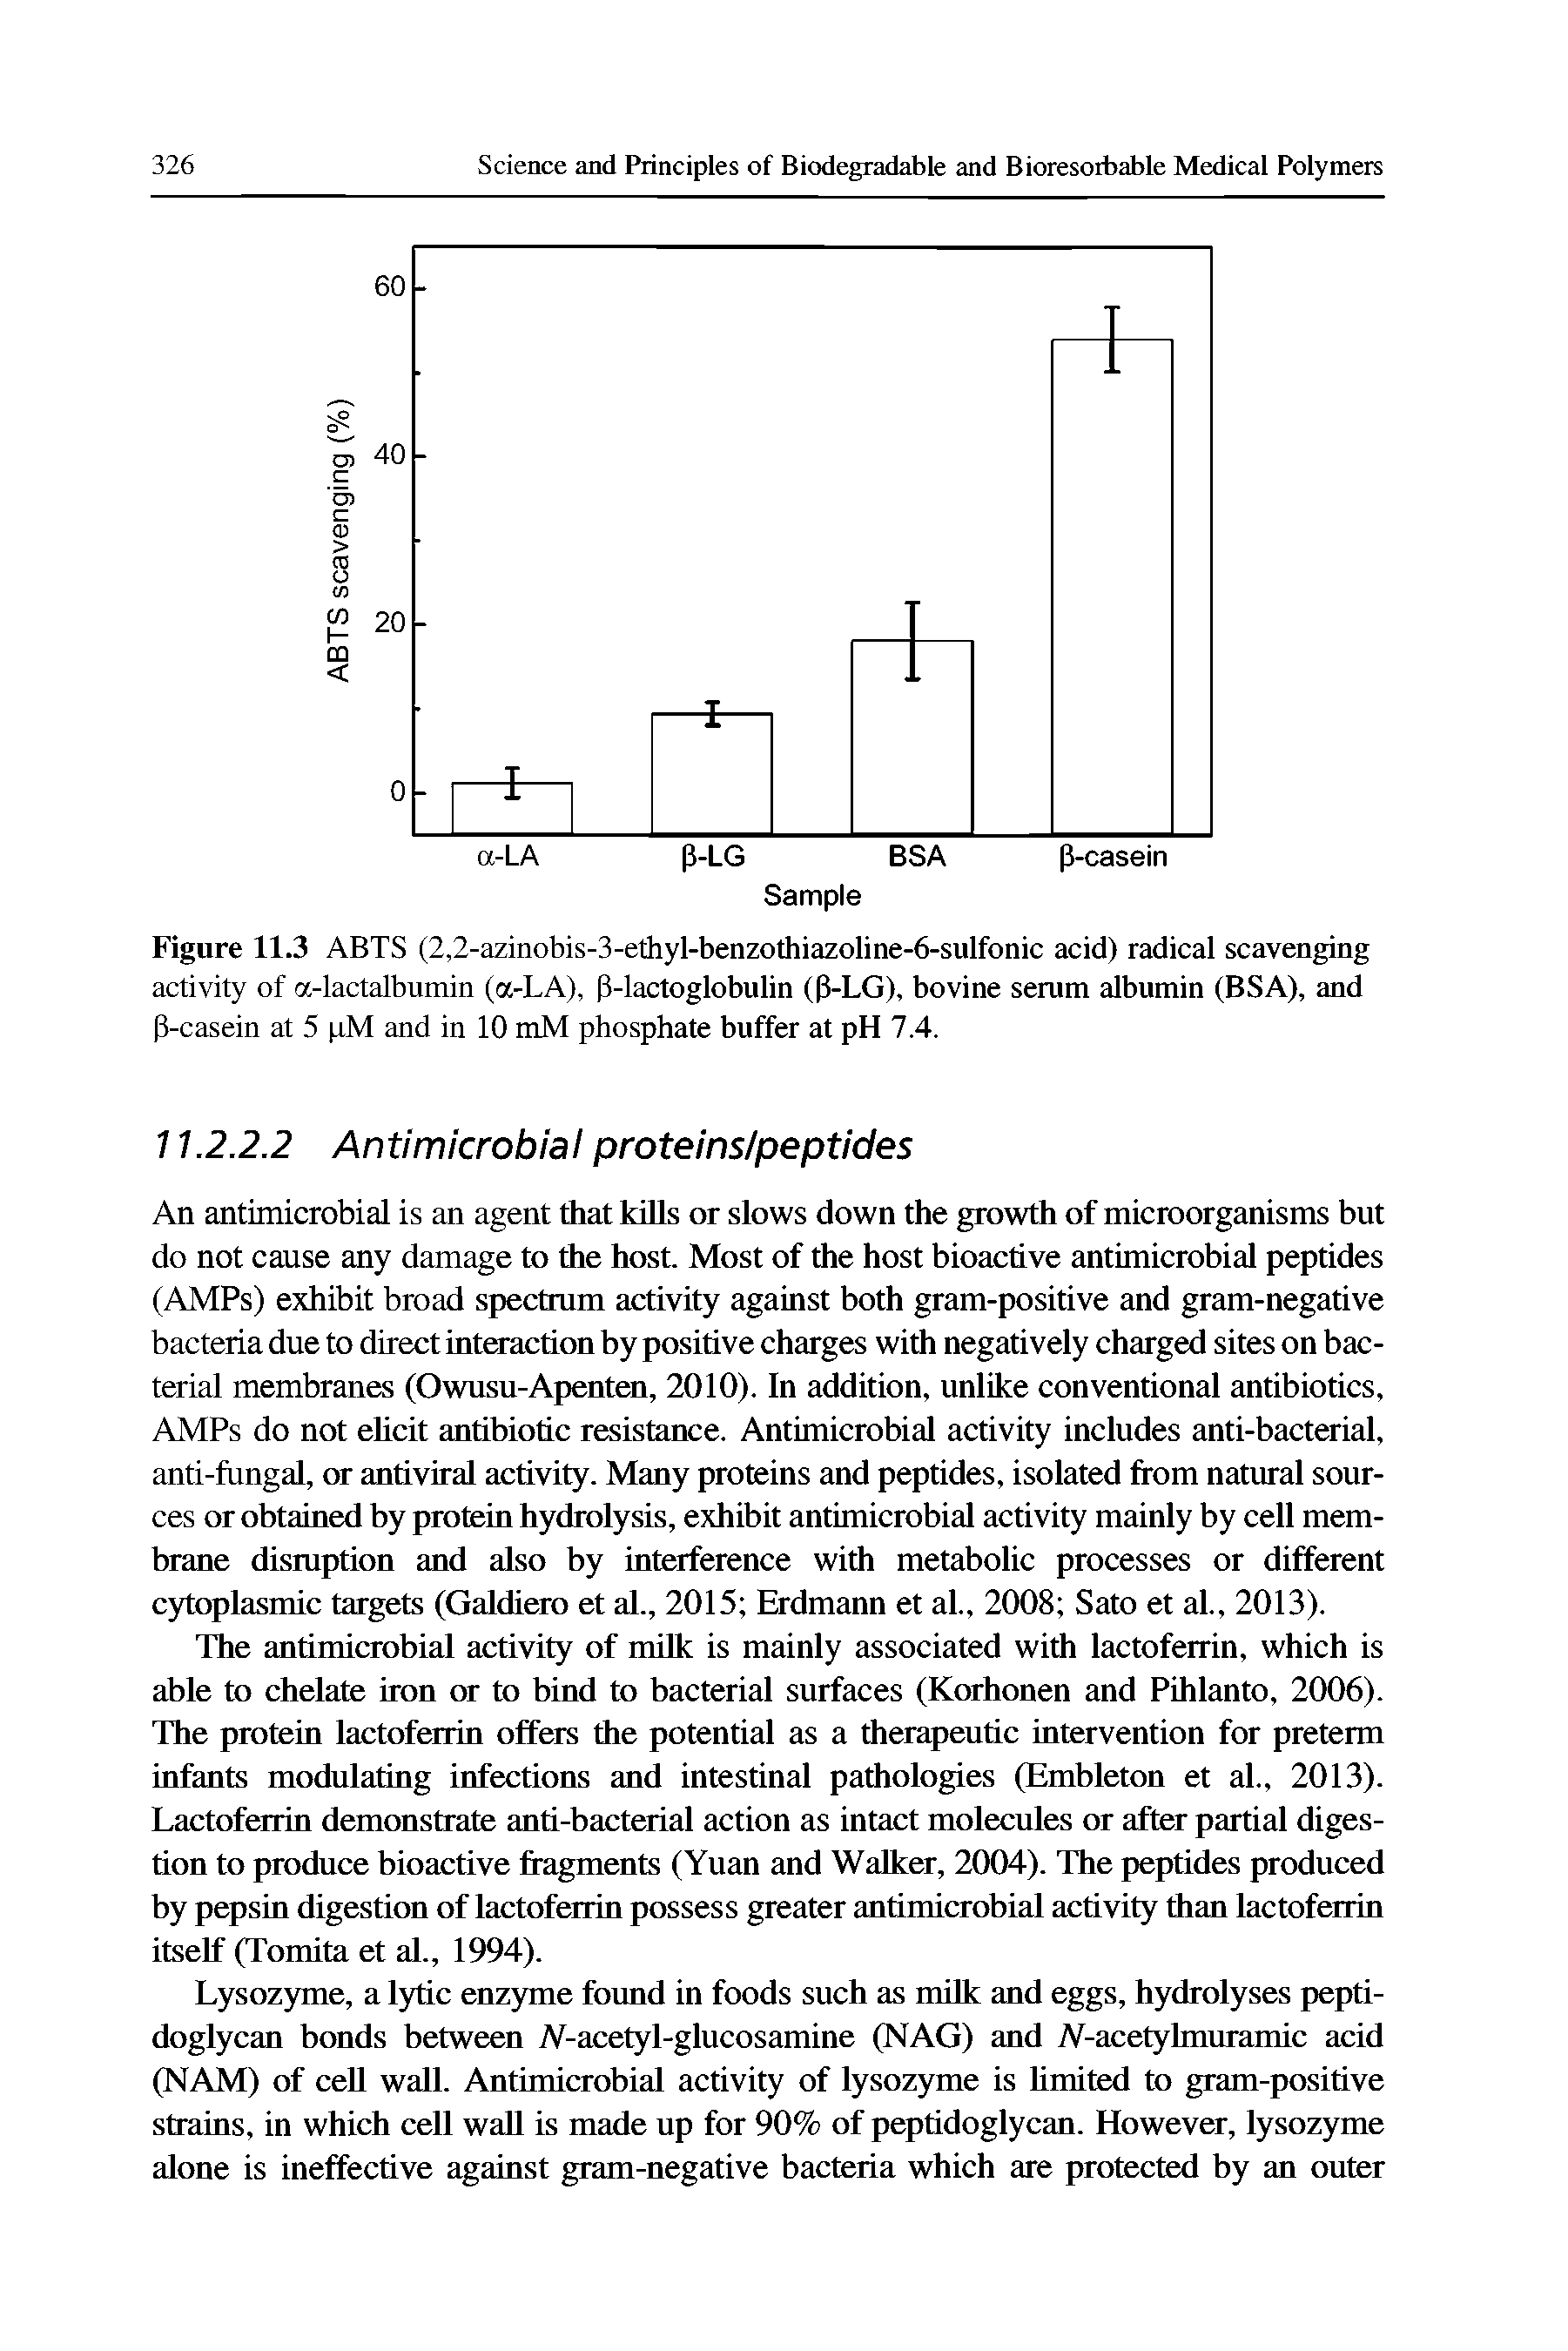 Figure 11.3 ABTS (2,2-azinobis-3-ethyl-benzothiazoline-6-sulfonic acid) radicai scavenging activity of a-lactalbumin (a-LA), P-lactoglobulin (p-LG), bovine serum albumin (BSA), and 3-casein at 5 [xM and in 10 mM phosphate buffer at pH 7.4.